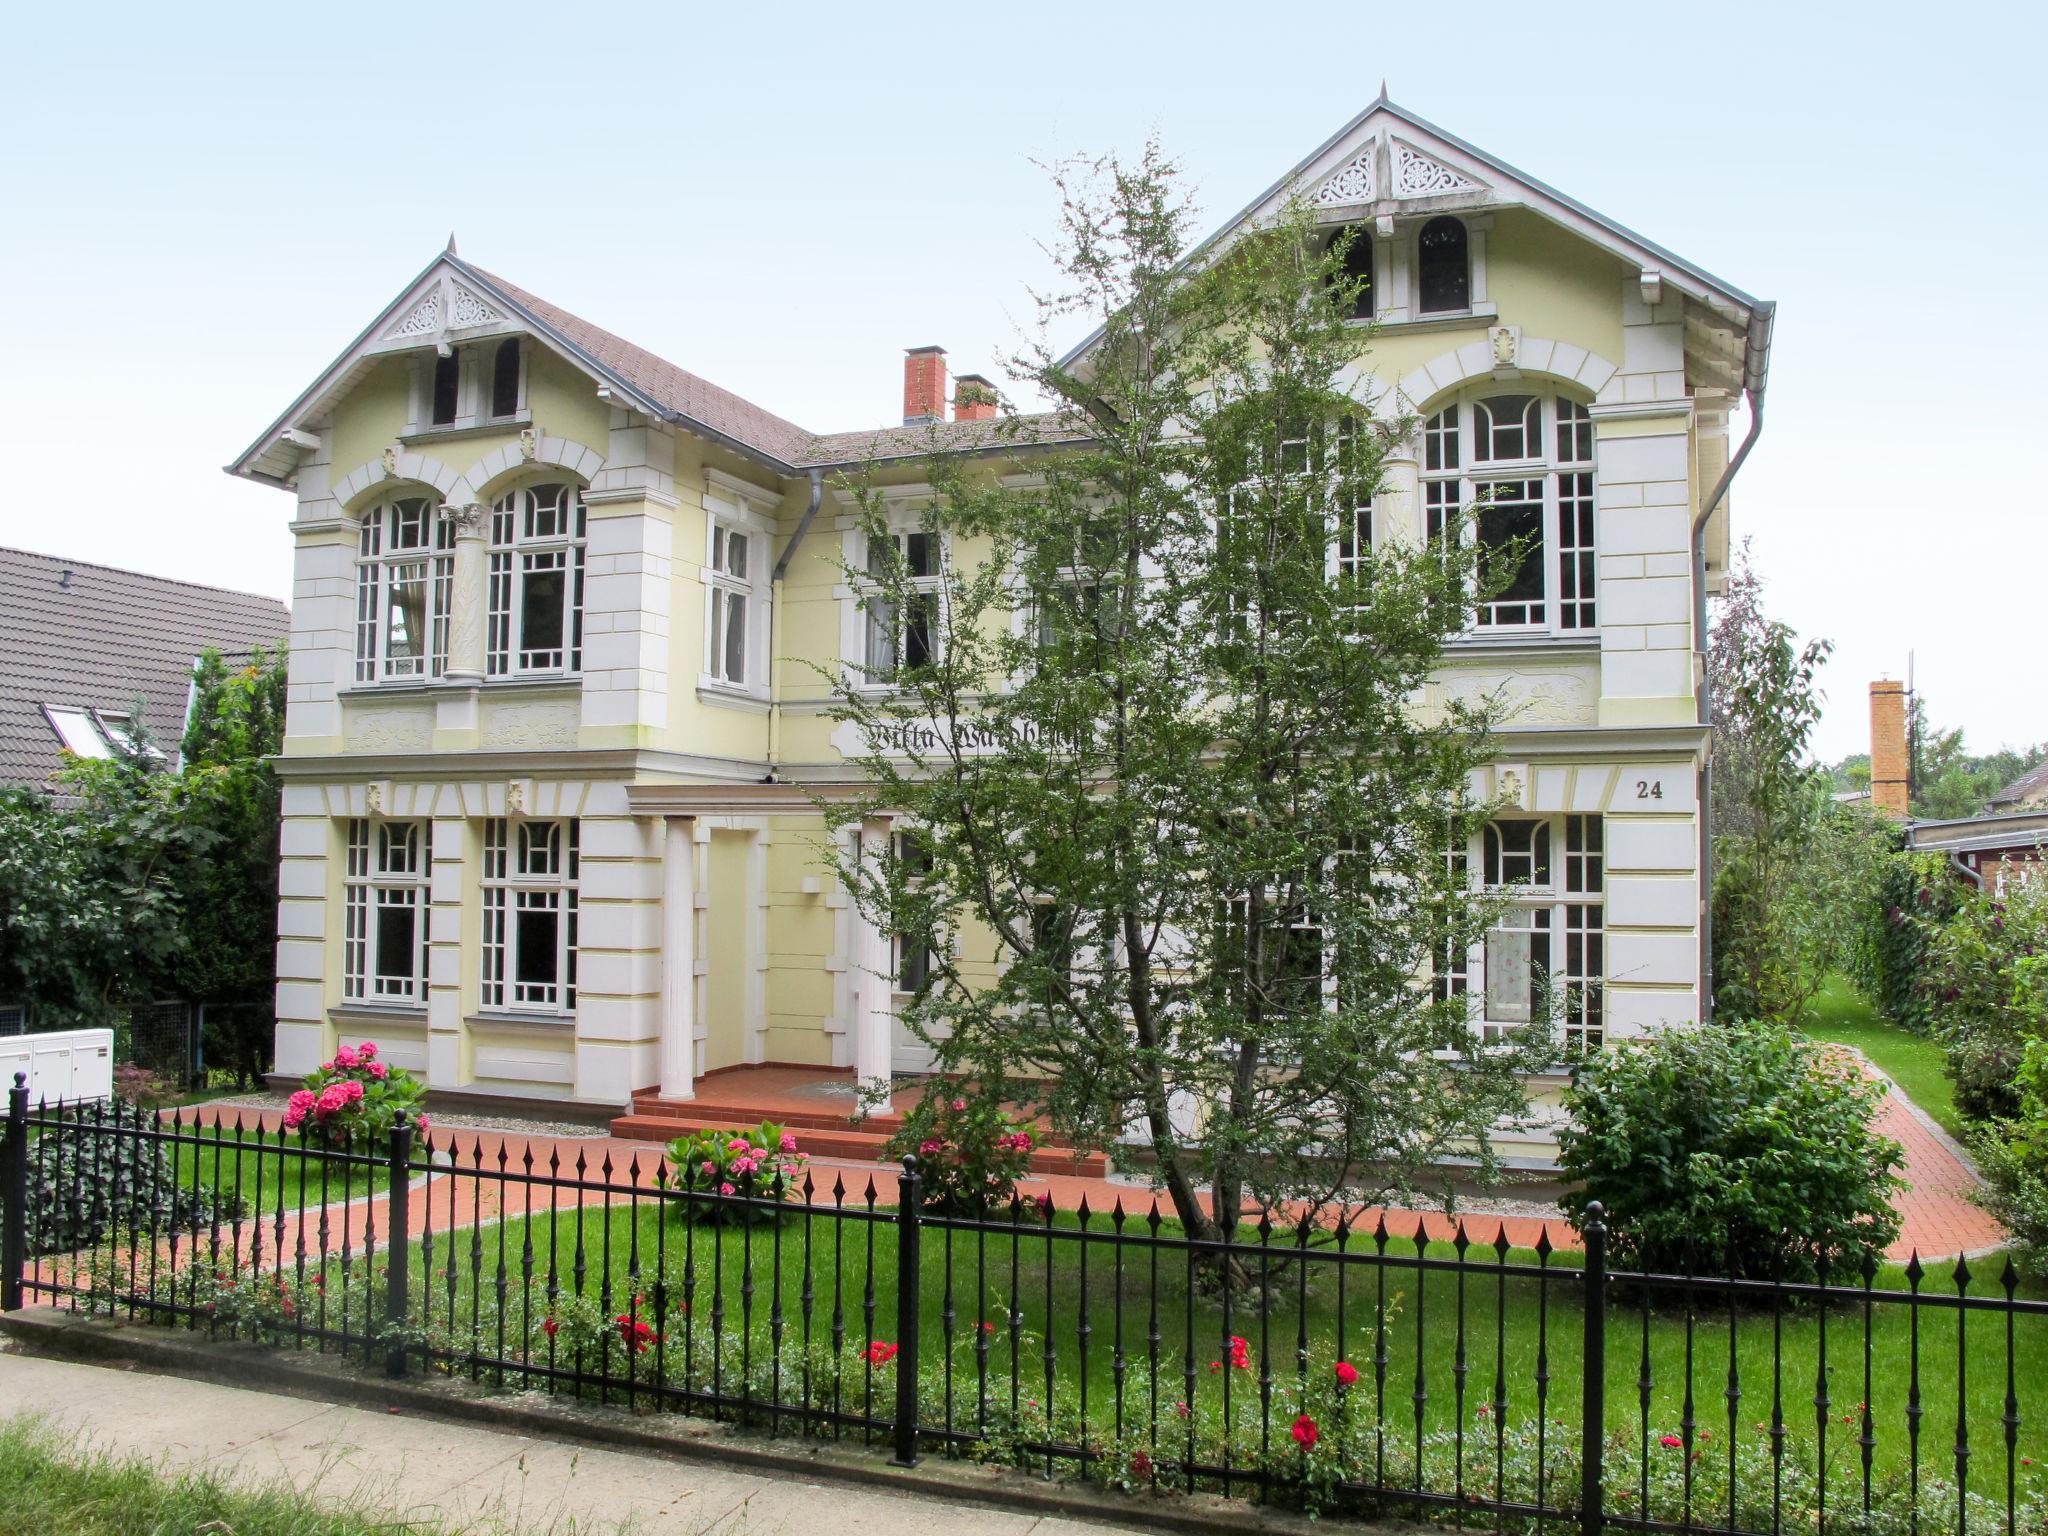 Ferienhaus Koserow